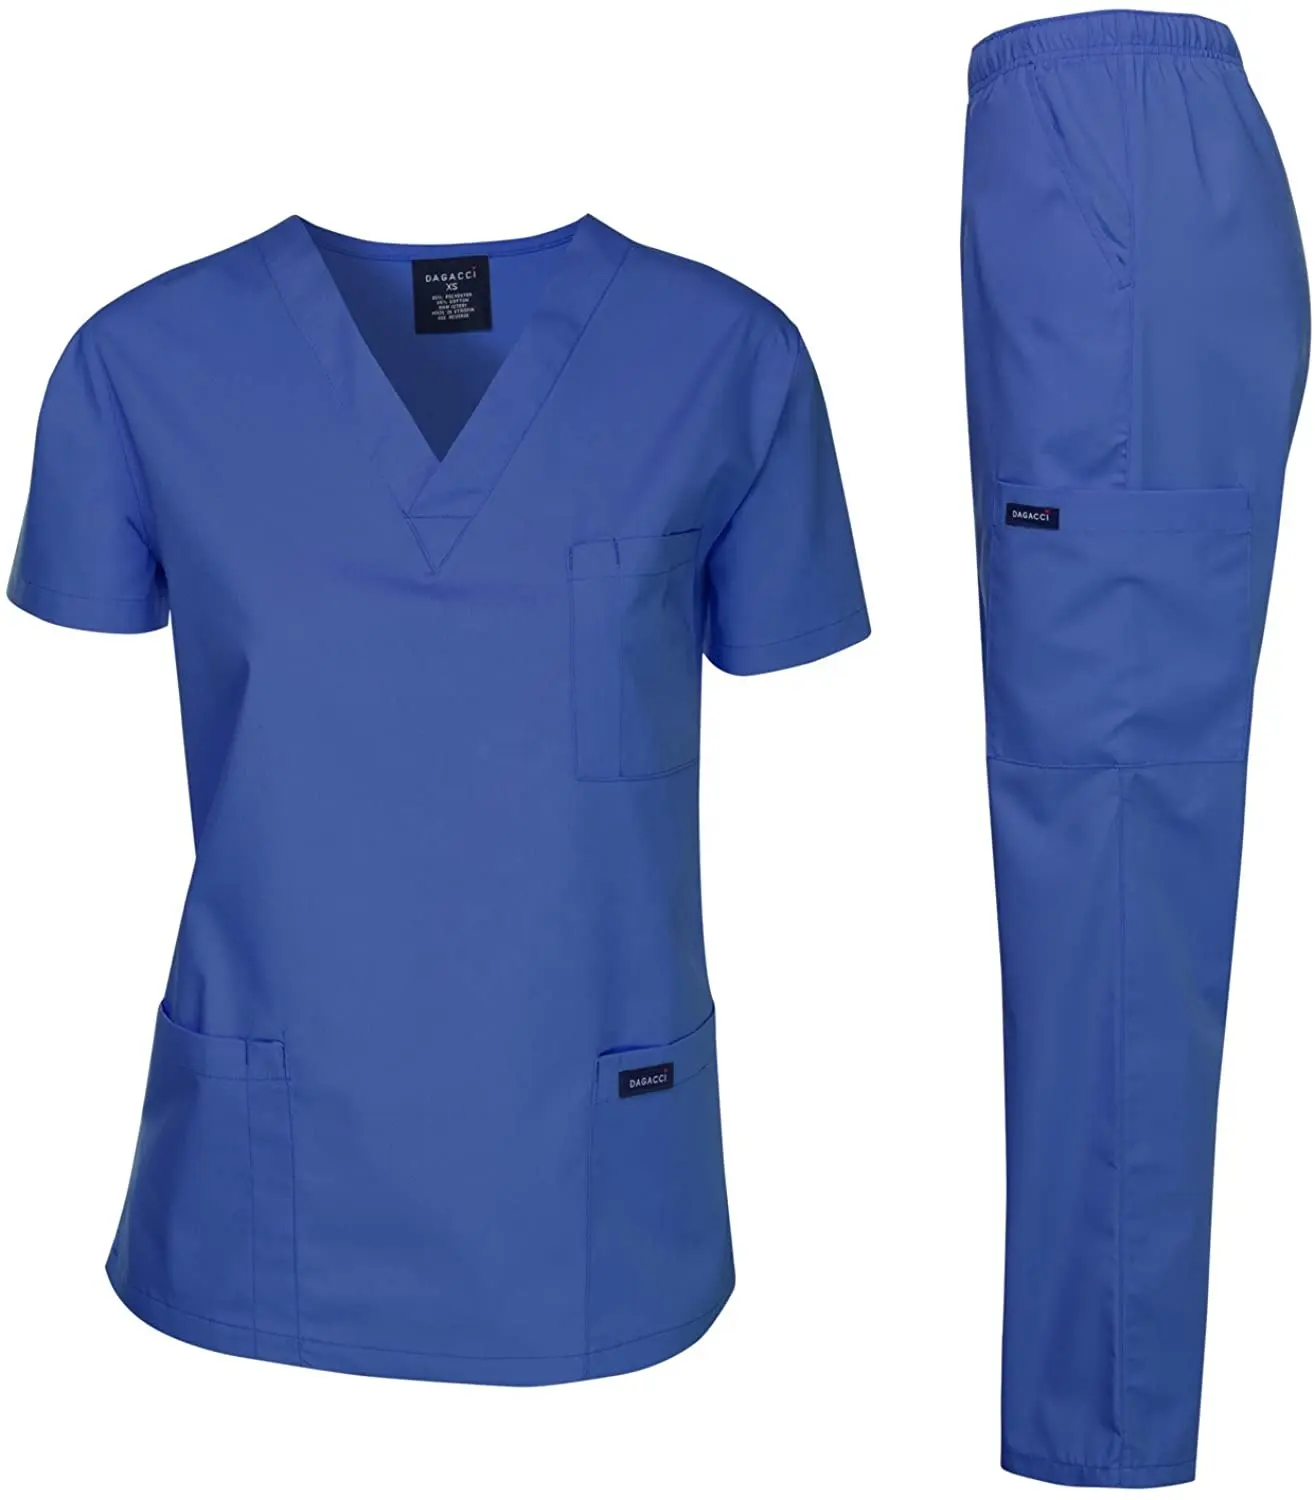 HOT 판매 탑 + 팬츠 세련된 정장 간호 남성 여성 조깅 간호사 의료 스크럽 유니폼 세트